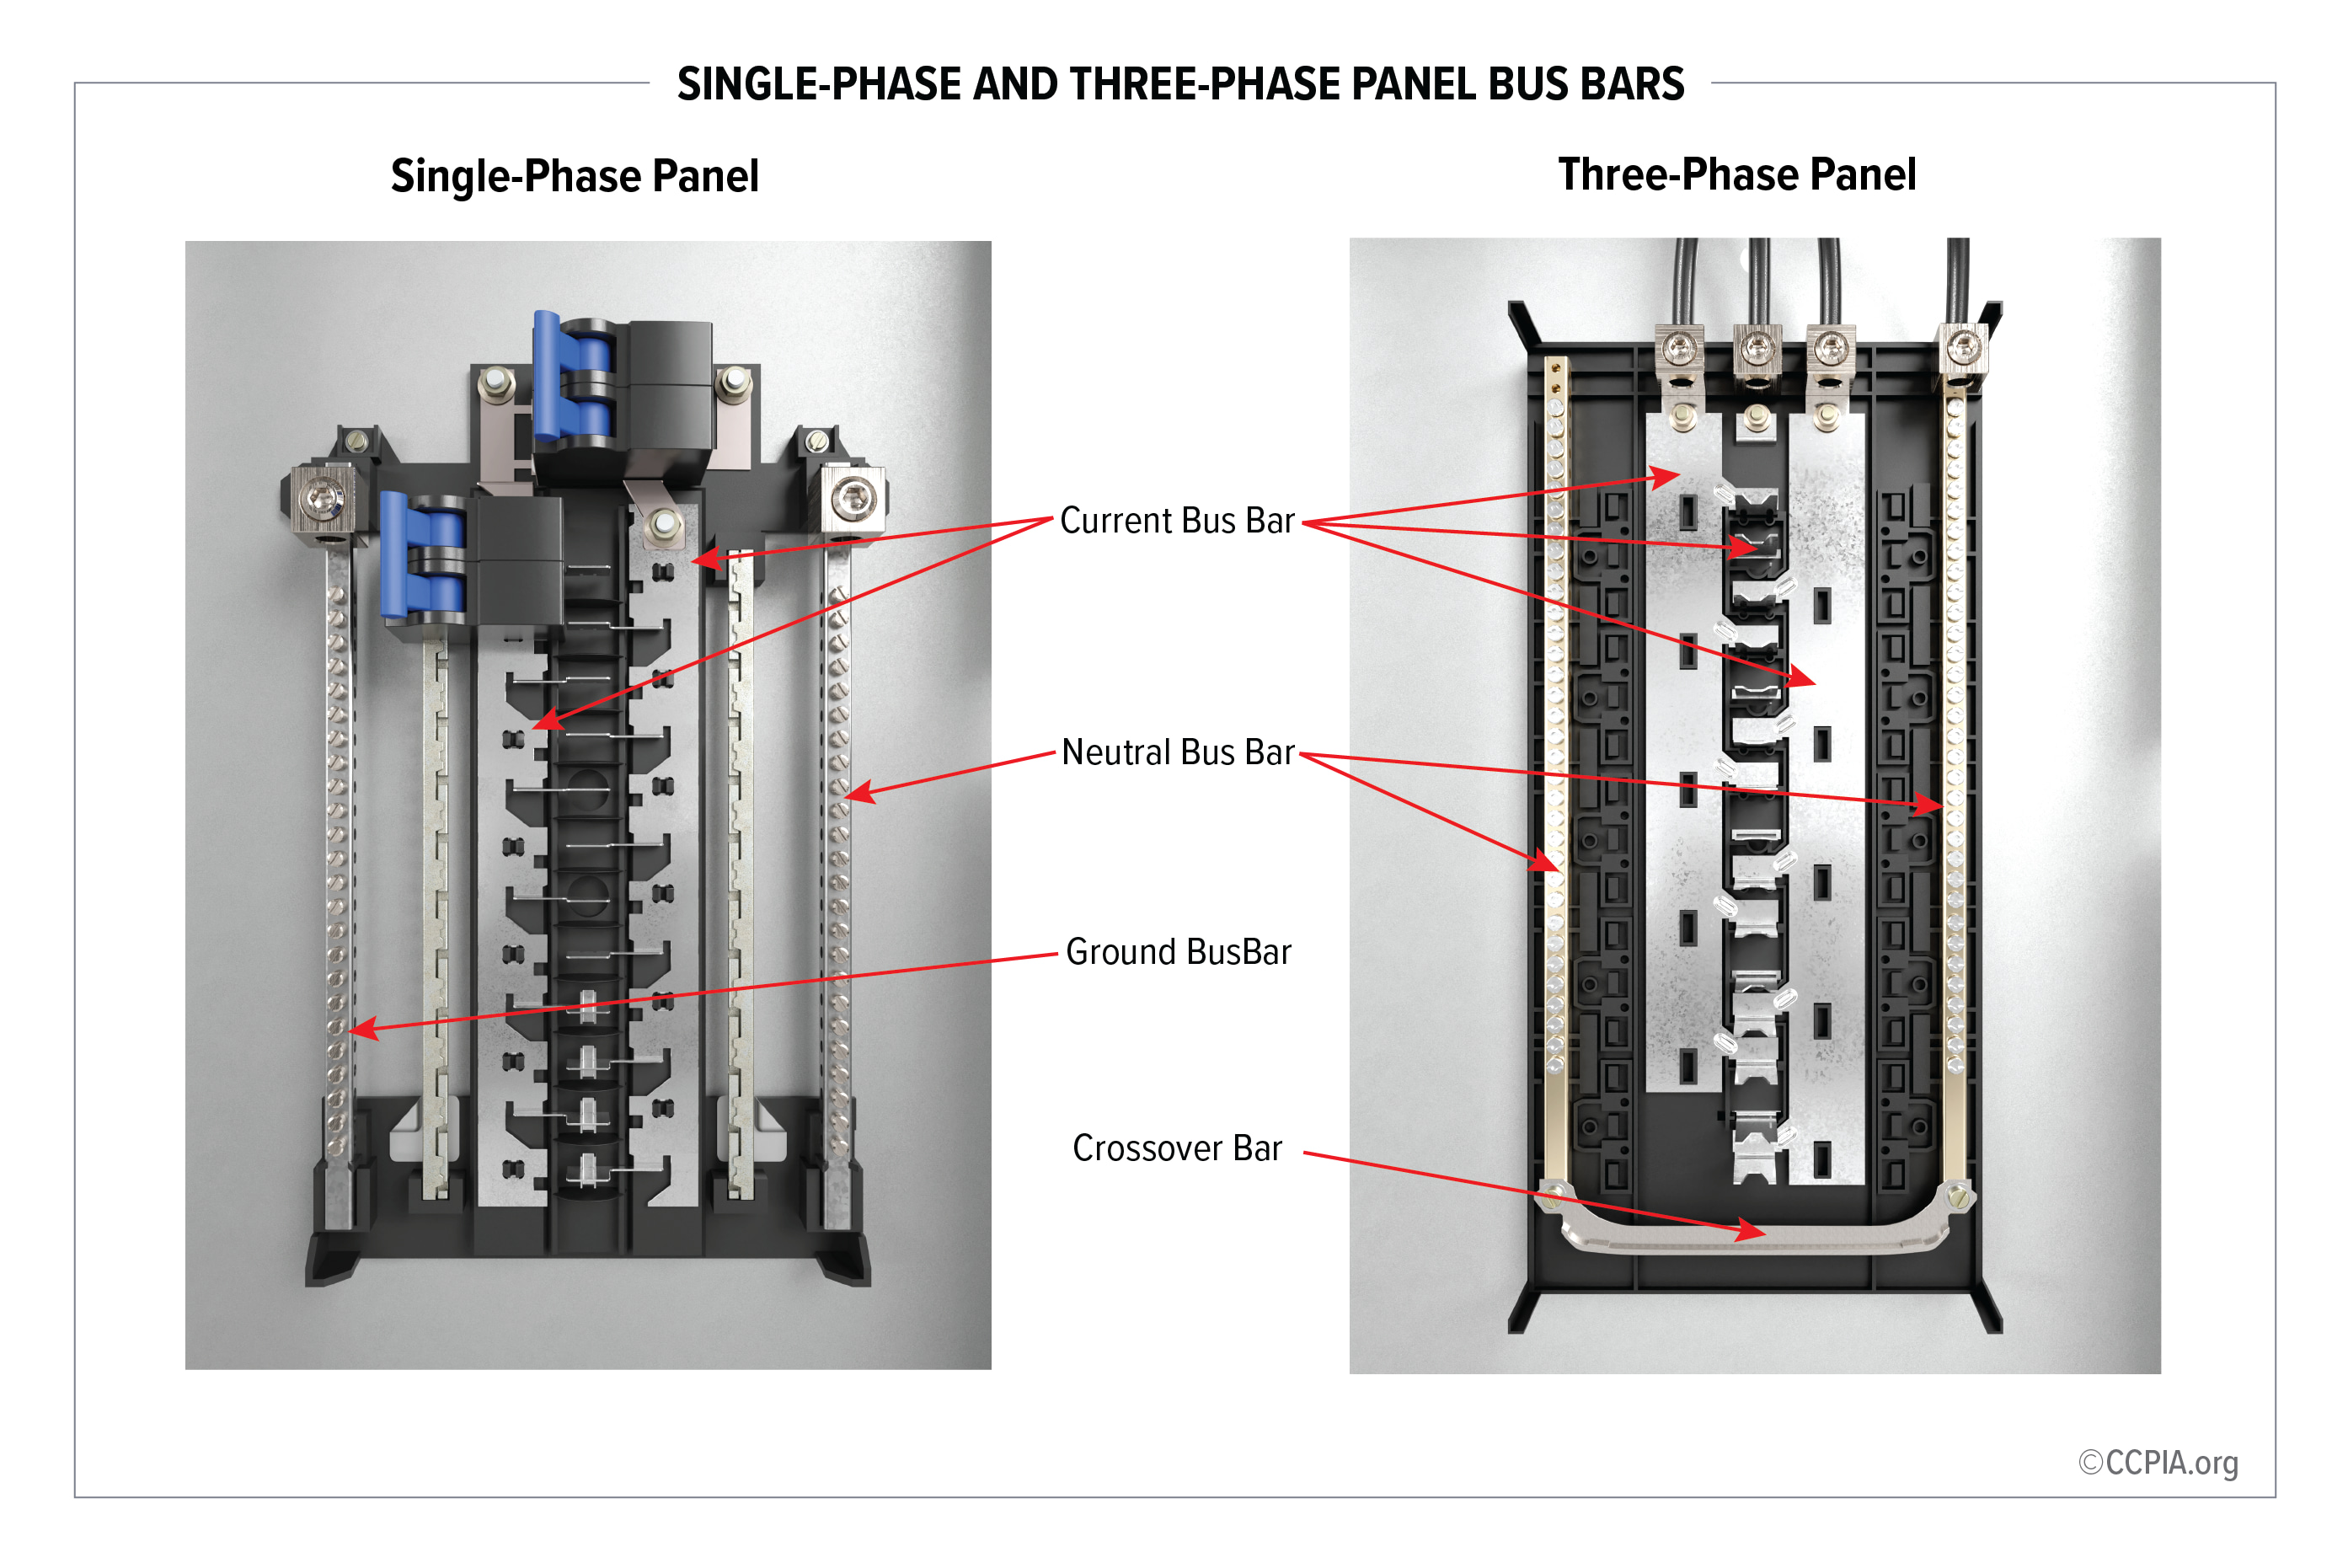 Single phase vs three phase panel bus bars.